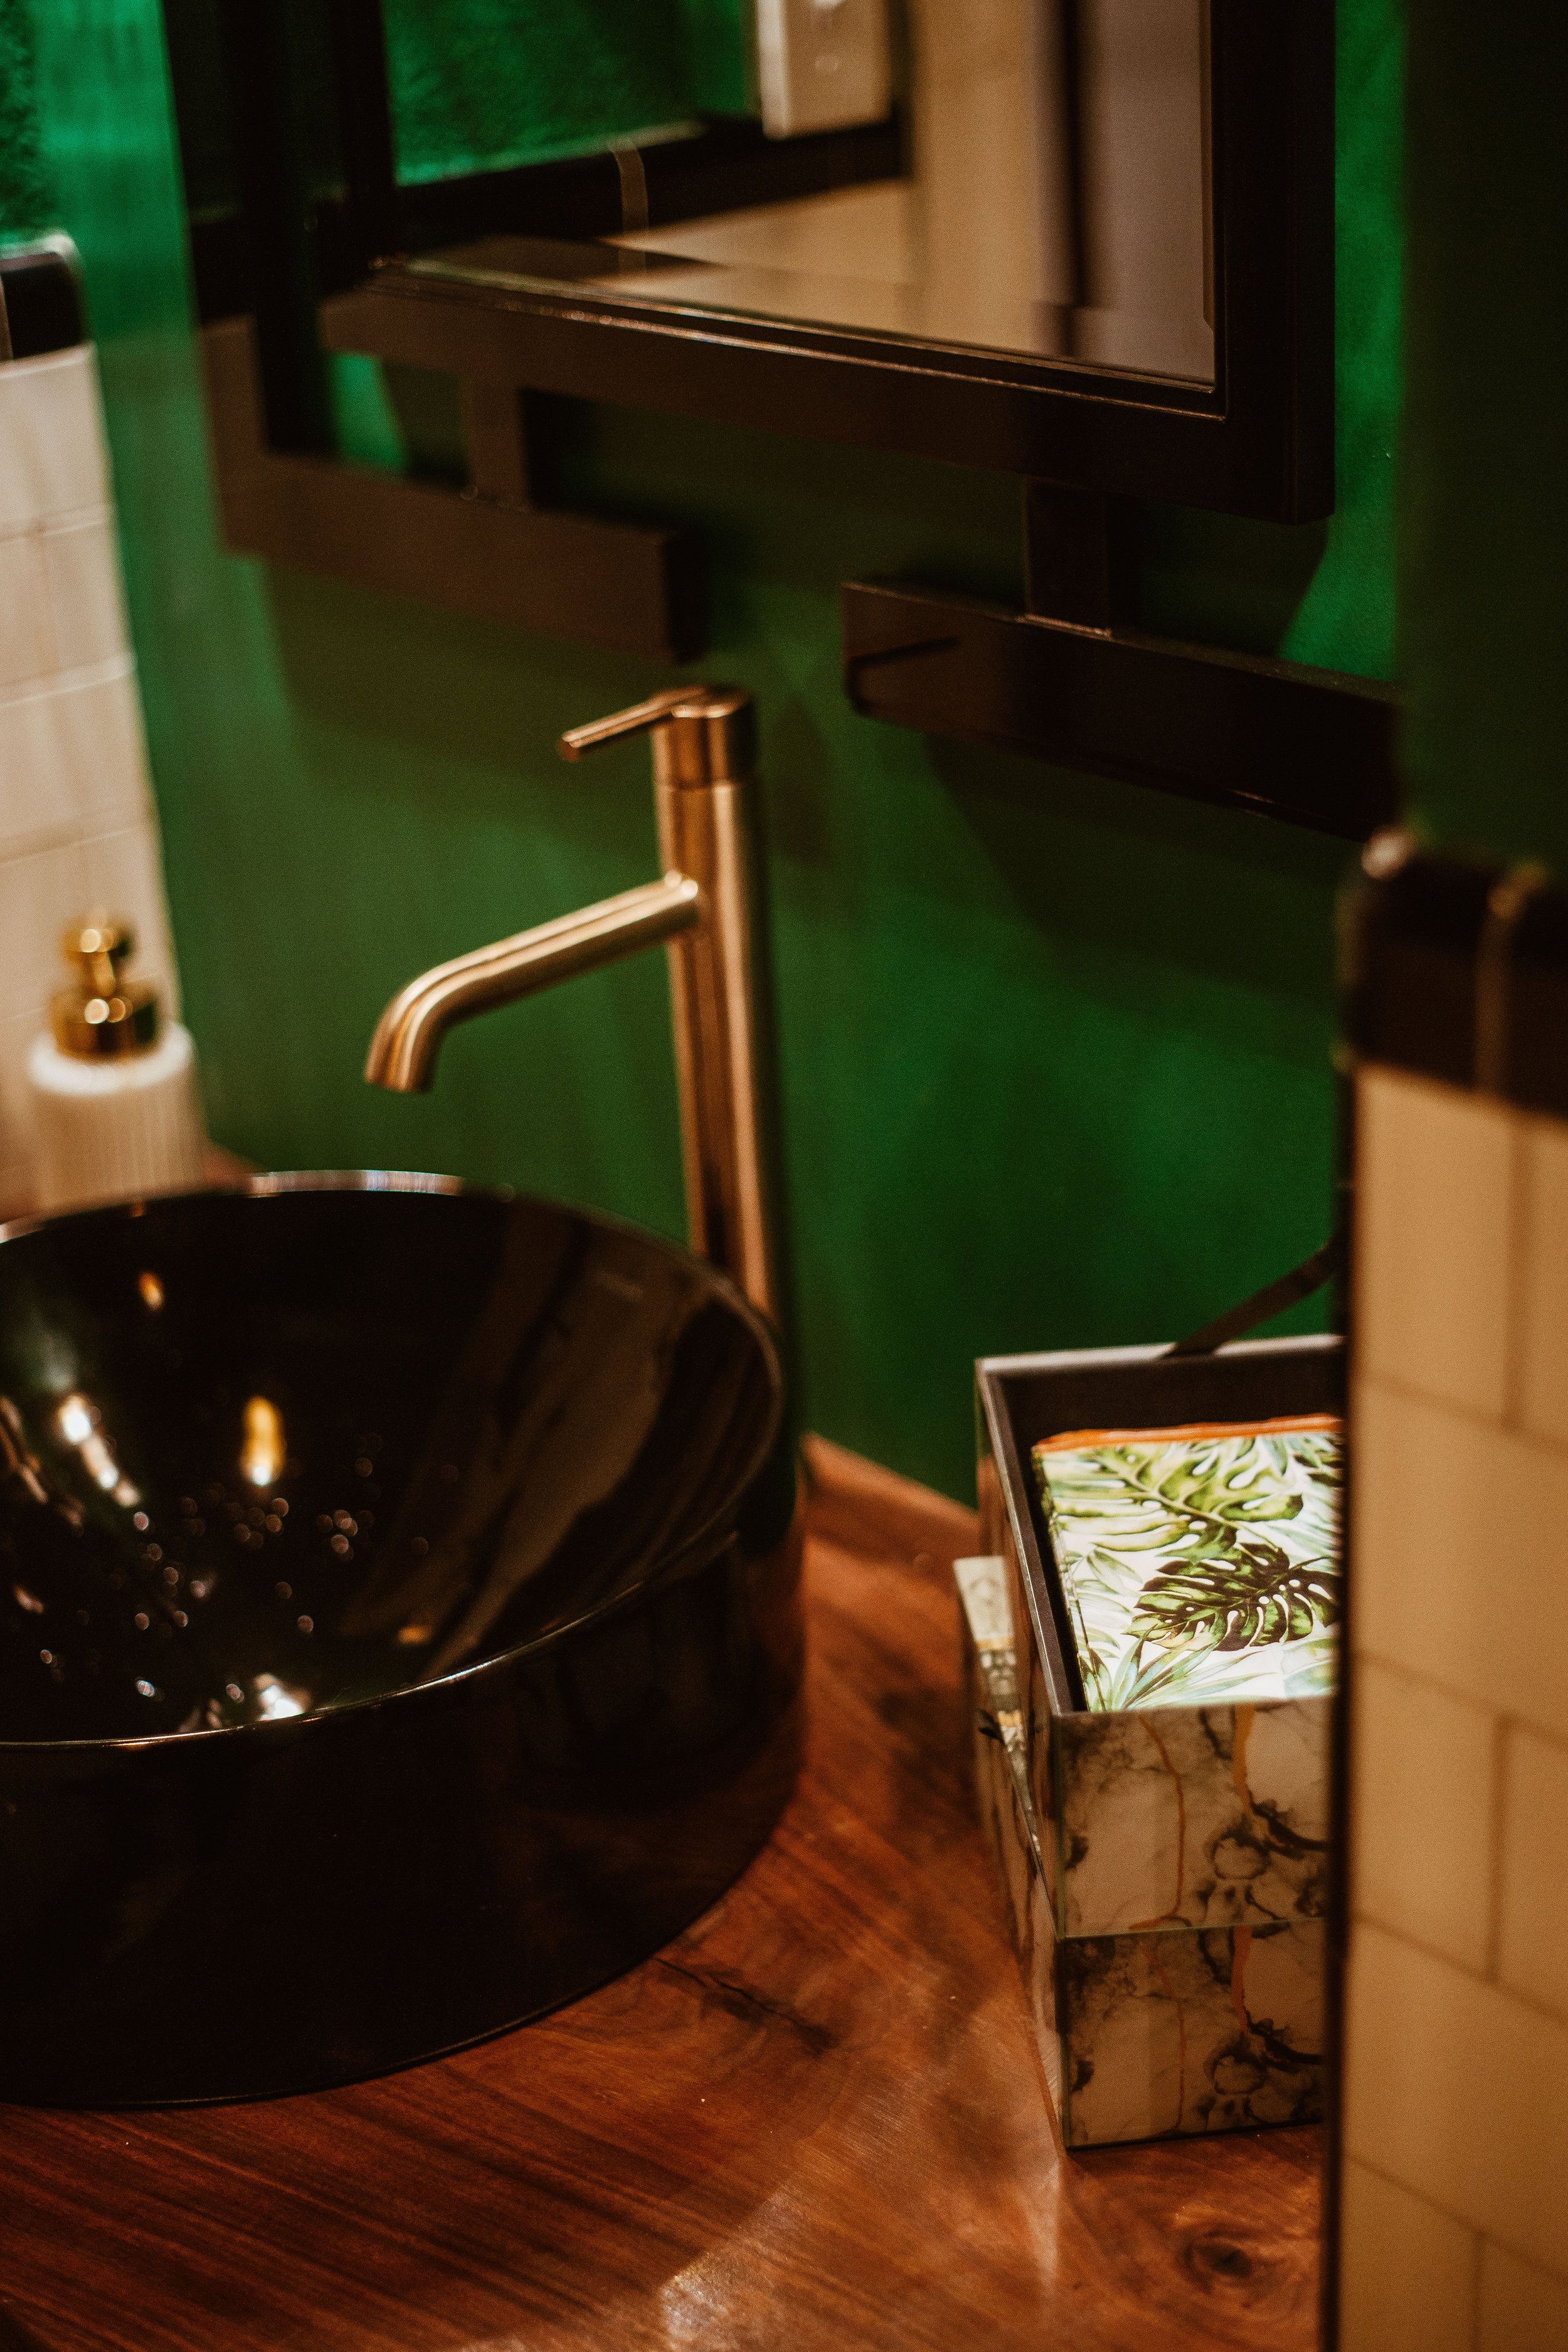 Golden faucet on green backdrop bathroom